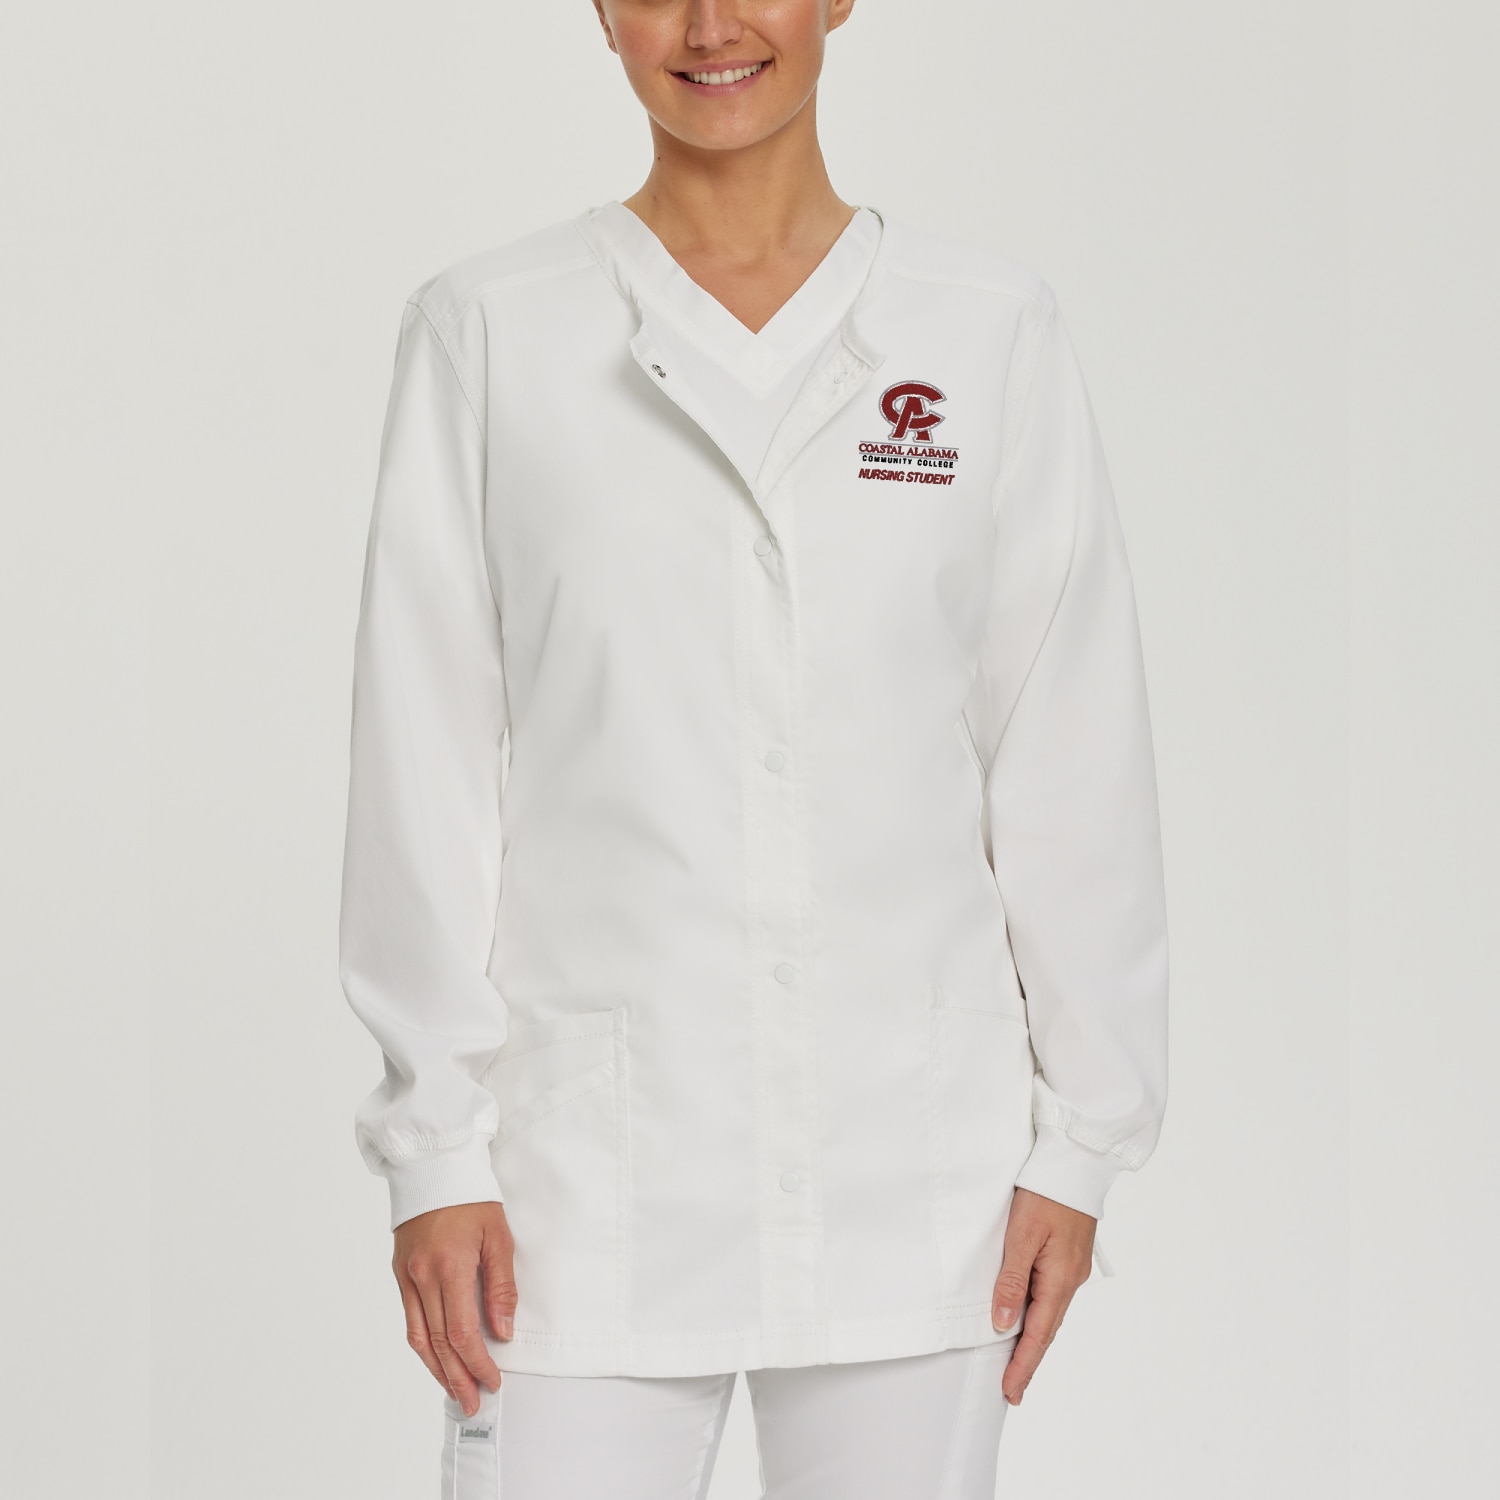 Women's Nursing White Warm-up Coat